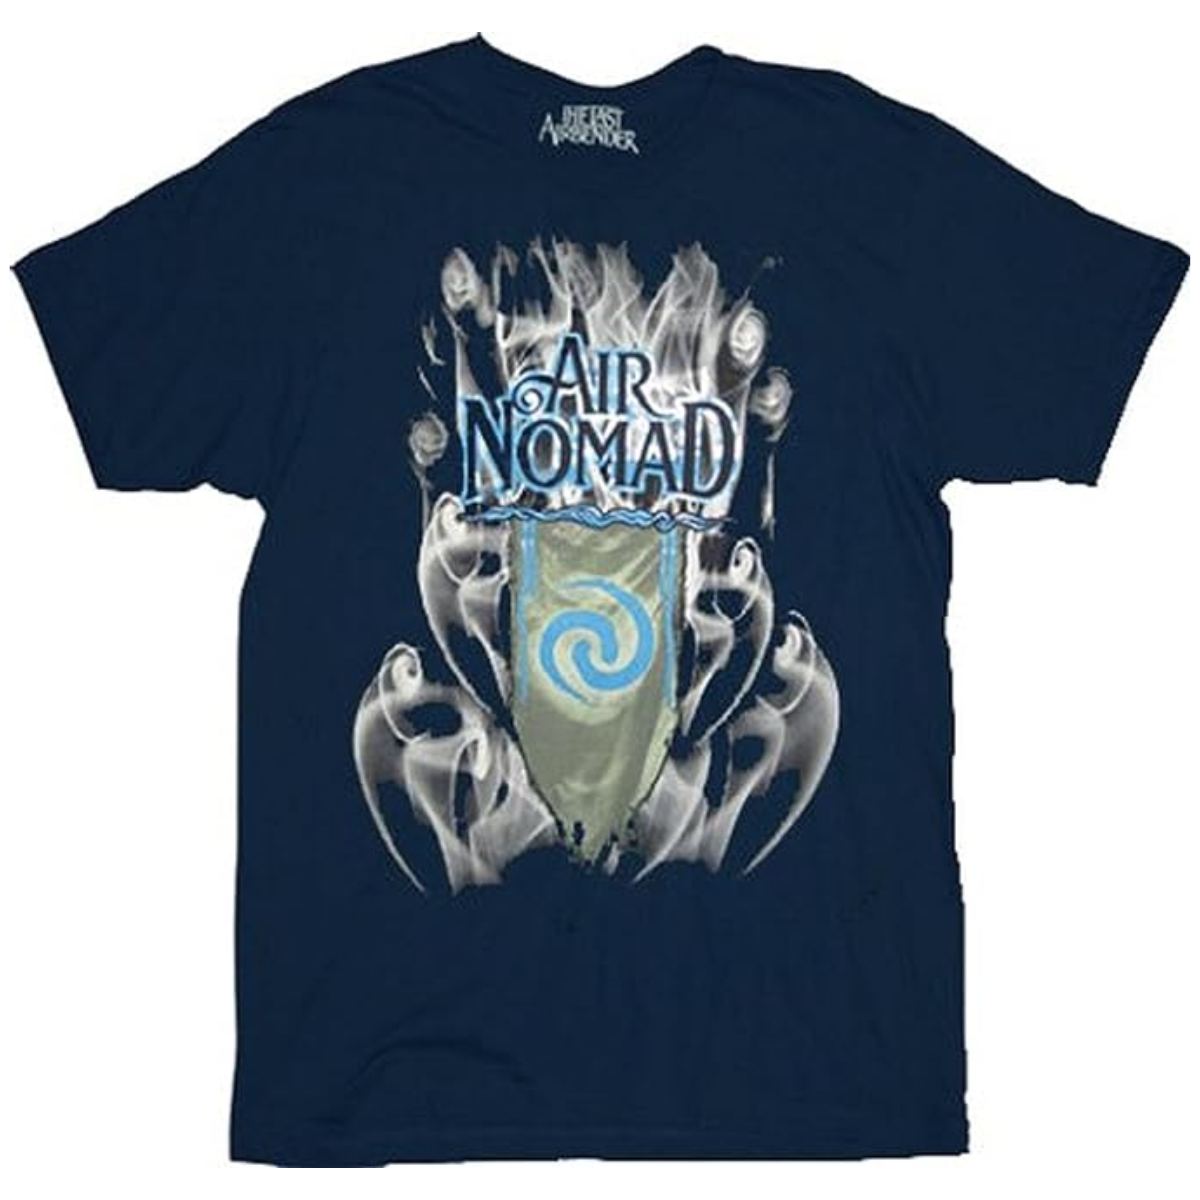 Air Nomad Smoke Navy Adult T-Shirt Tee